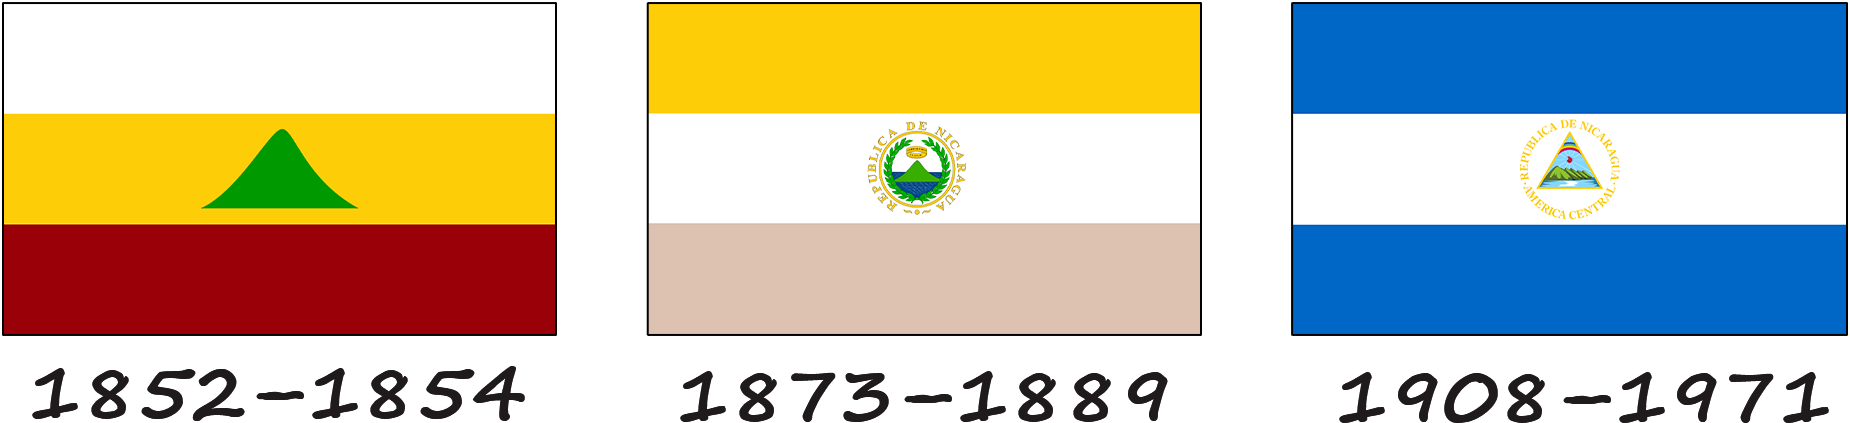 Історія прапору Нікарагуа